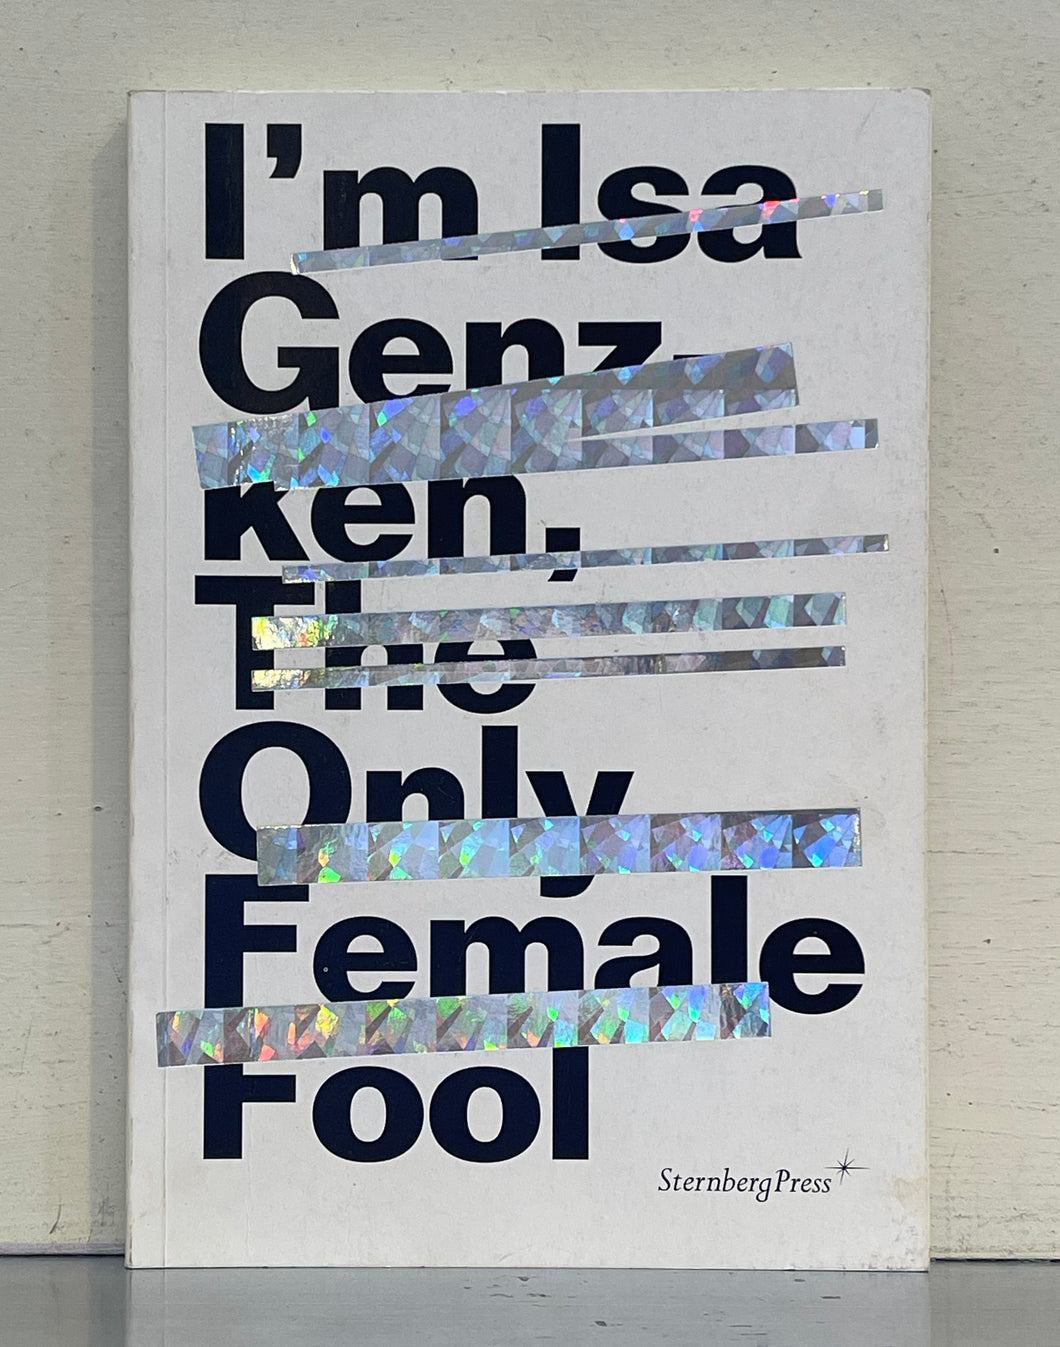 I’m Isa Genzken, the Only Female Fool